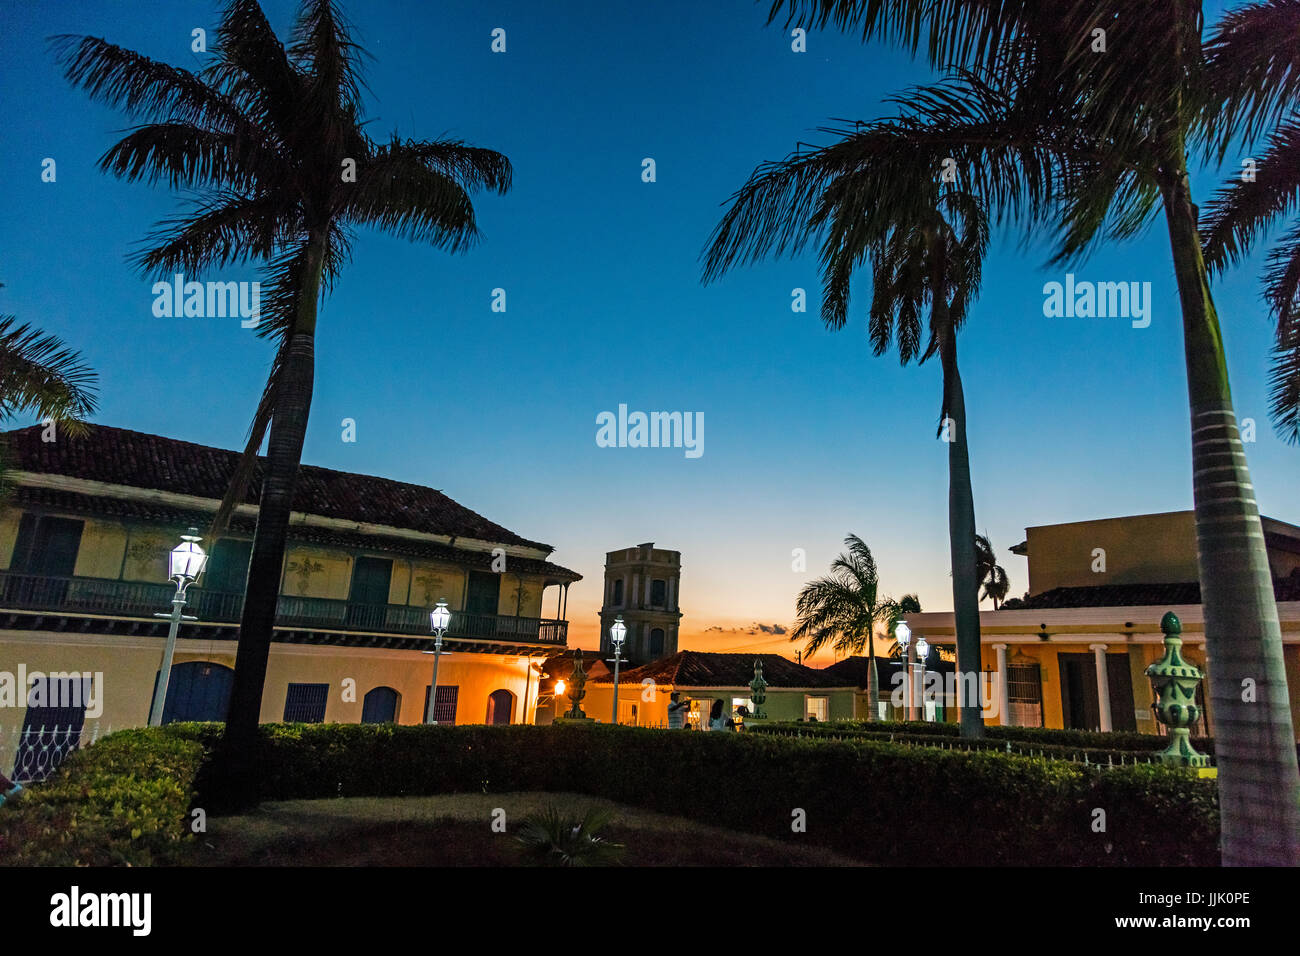 Palm trees and historic buildings on the PLAZA MAYOR at dusk - TRINIDAD, CUBA Stock Photo